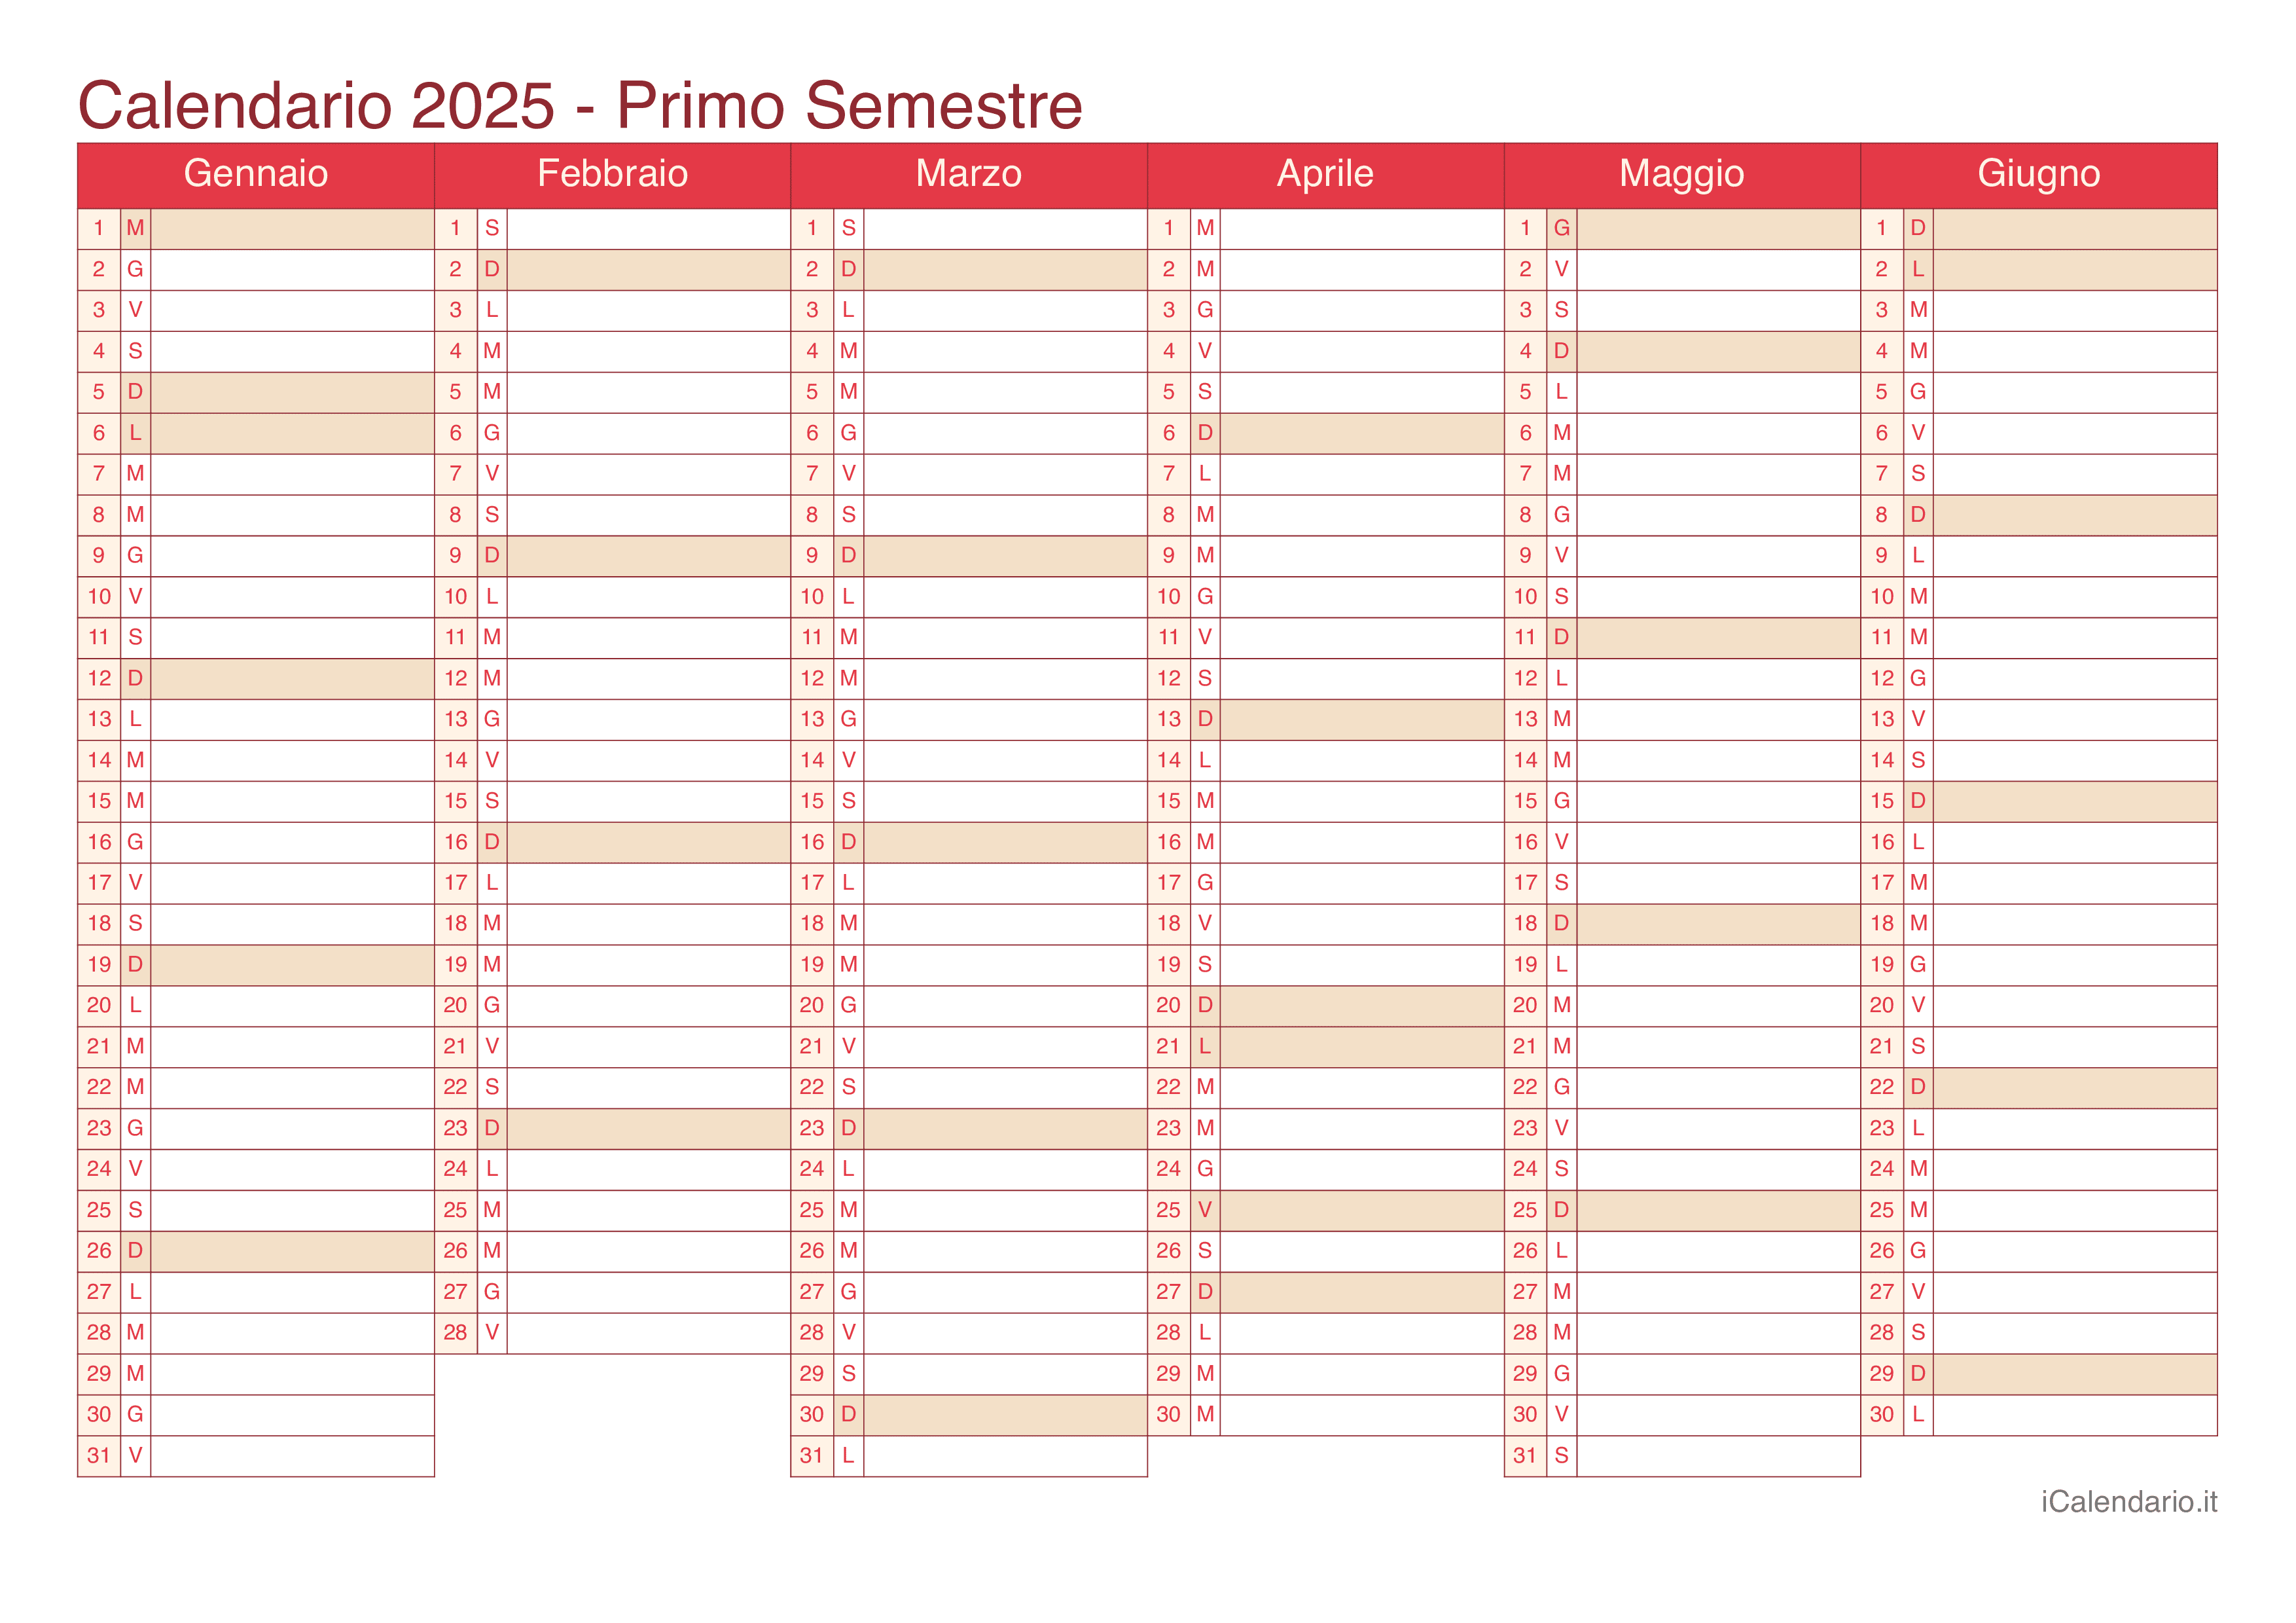 Calendario semestrale 2025 - Cherry